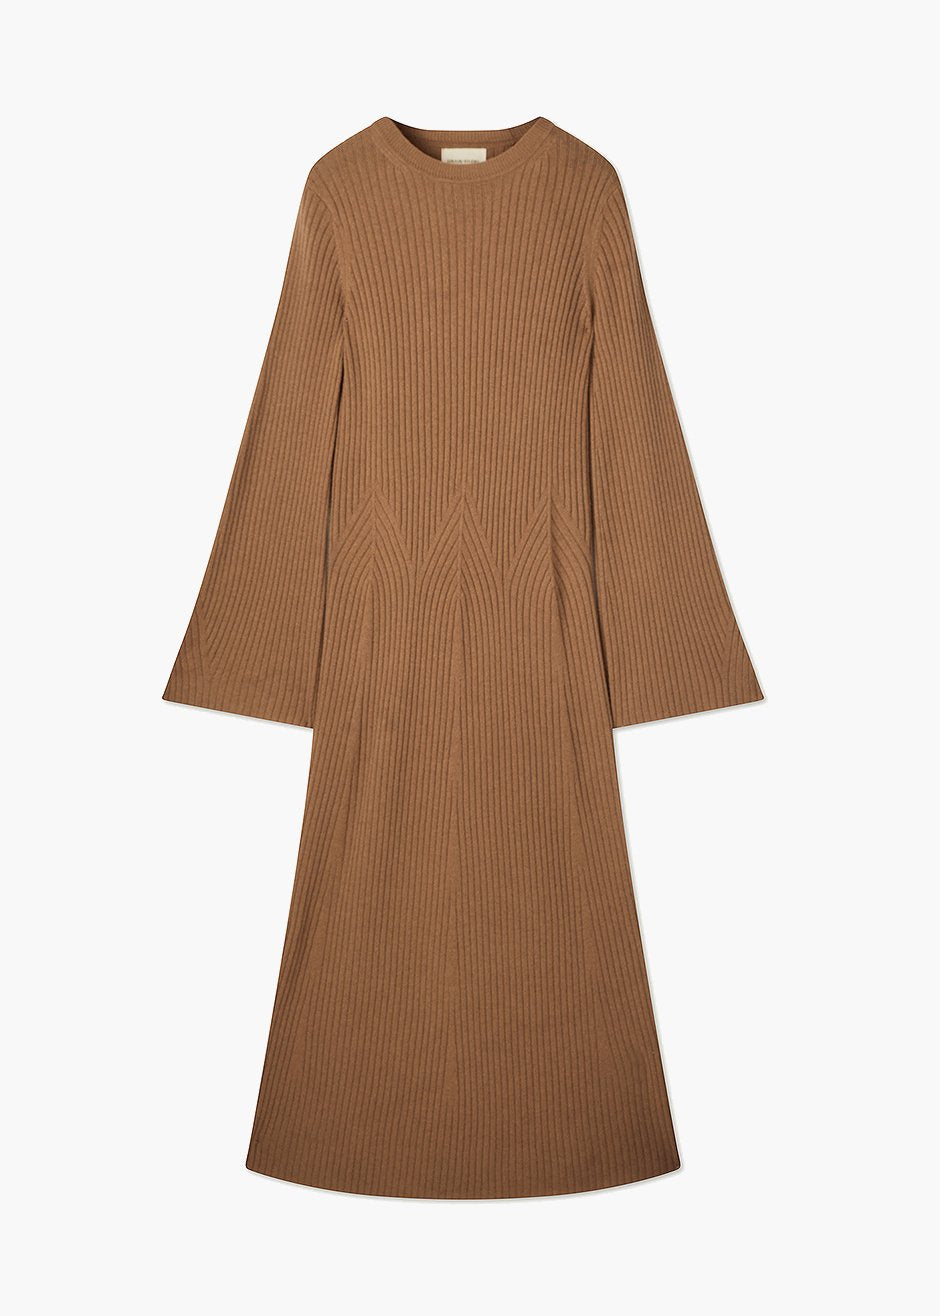 Loulou Studio Larga Knit Dress - Camel - 8